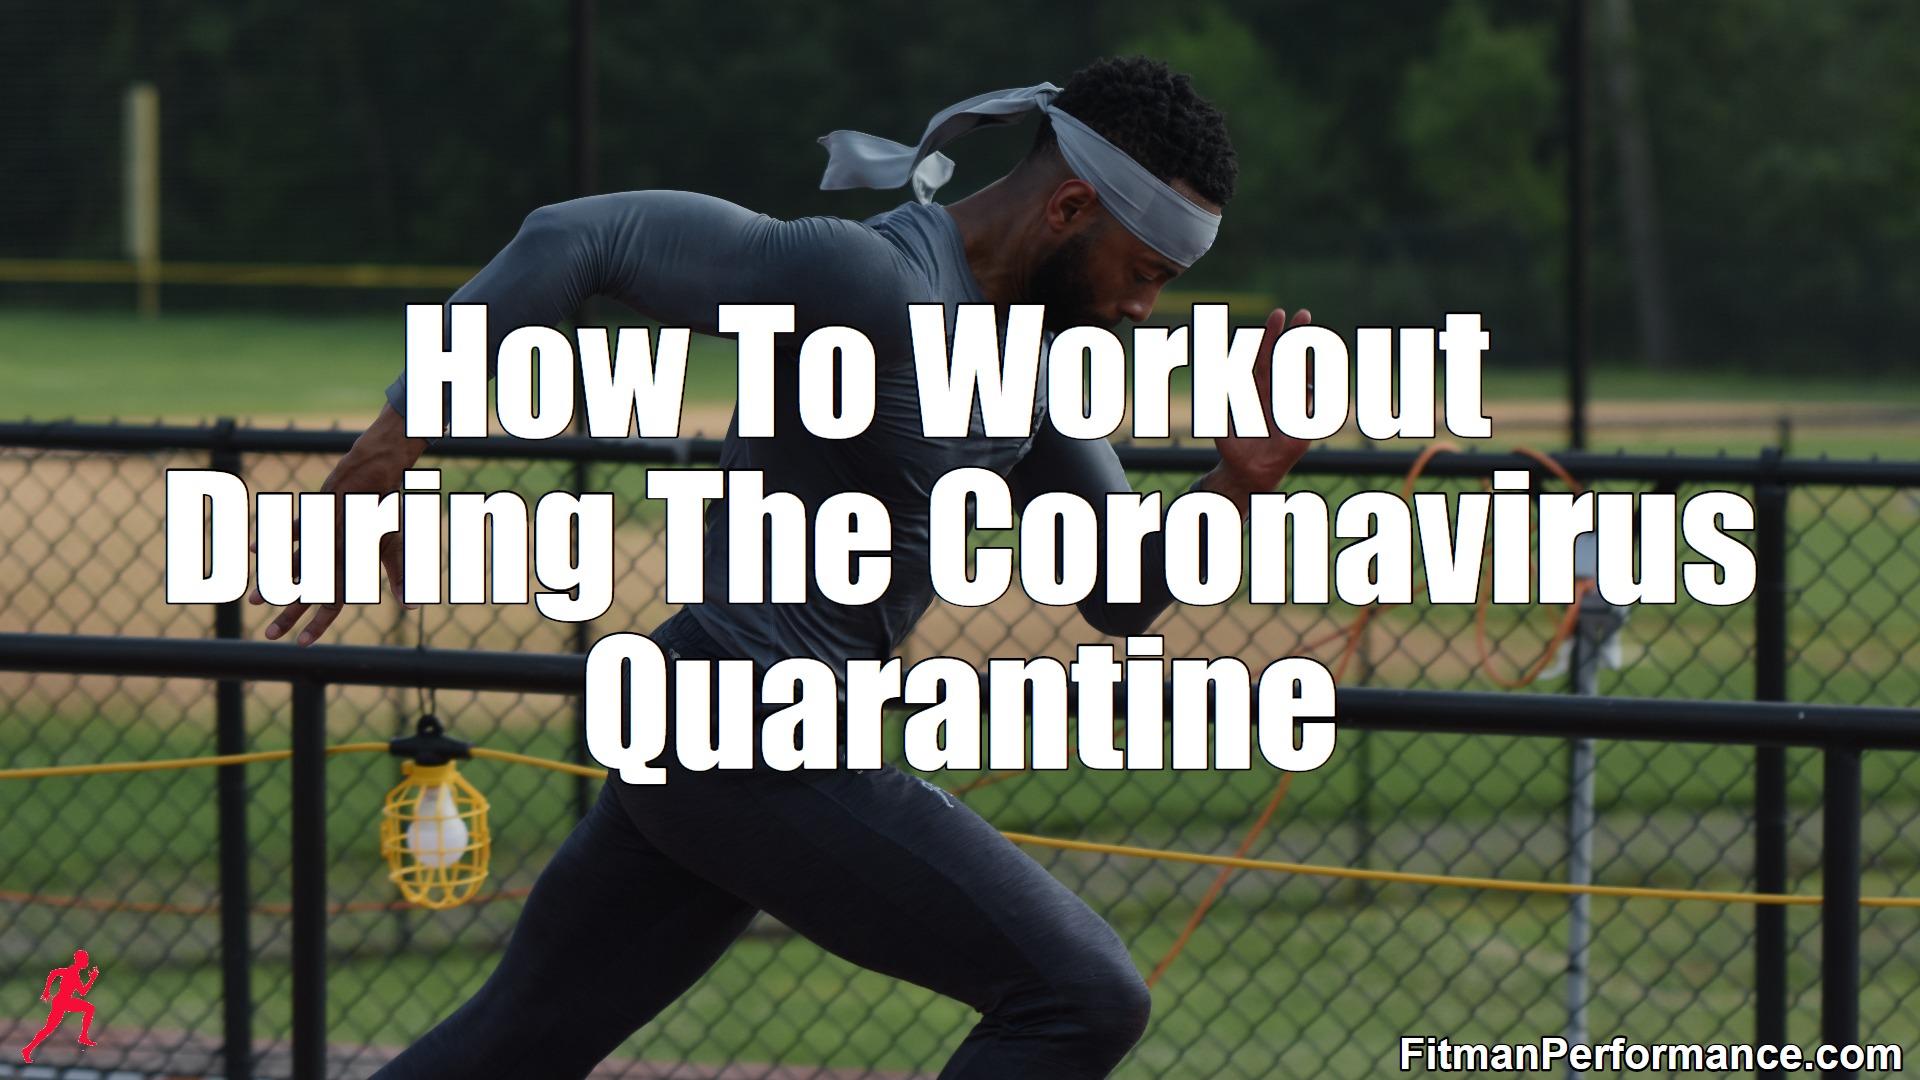 How To Workout During The Coronavirus Quarantine